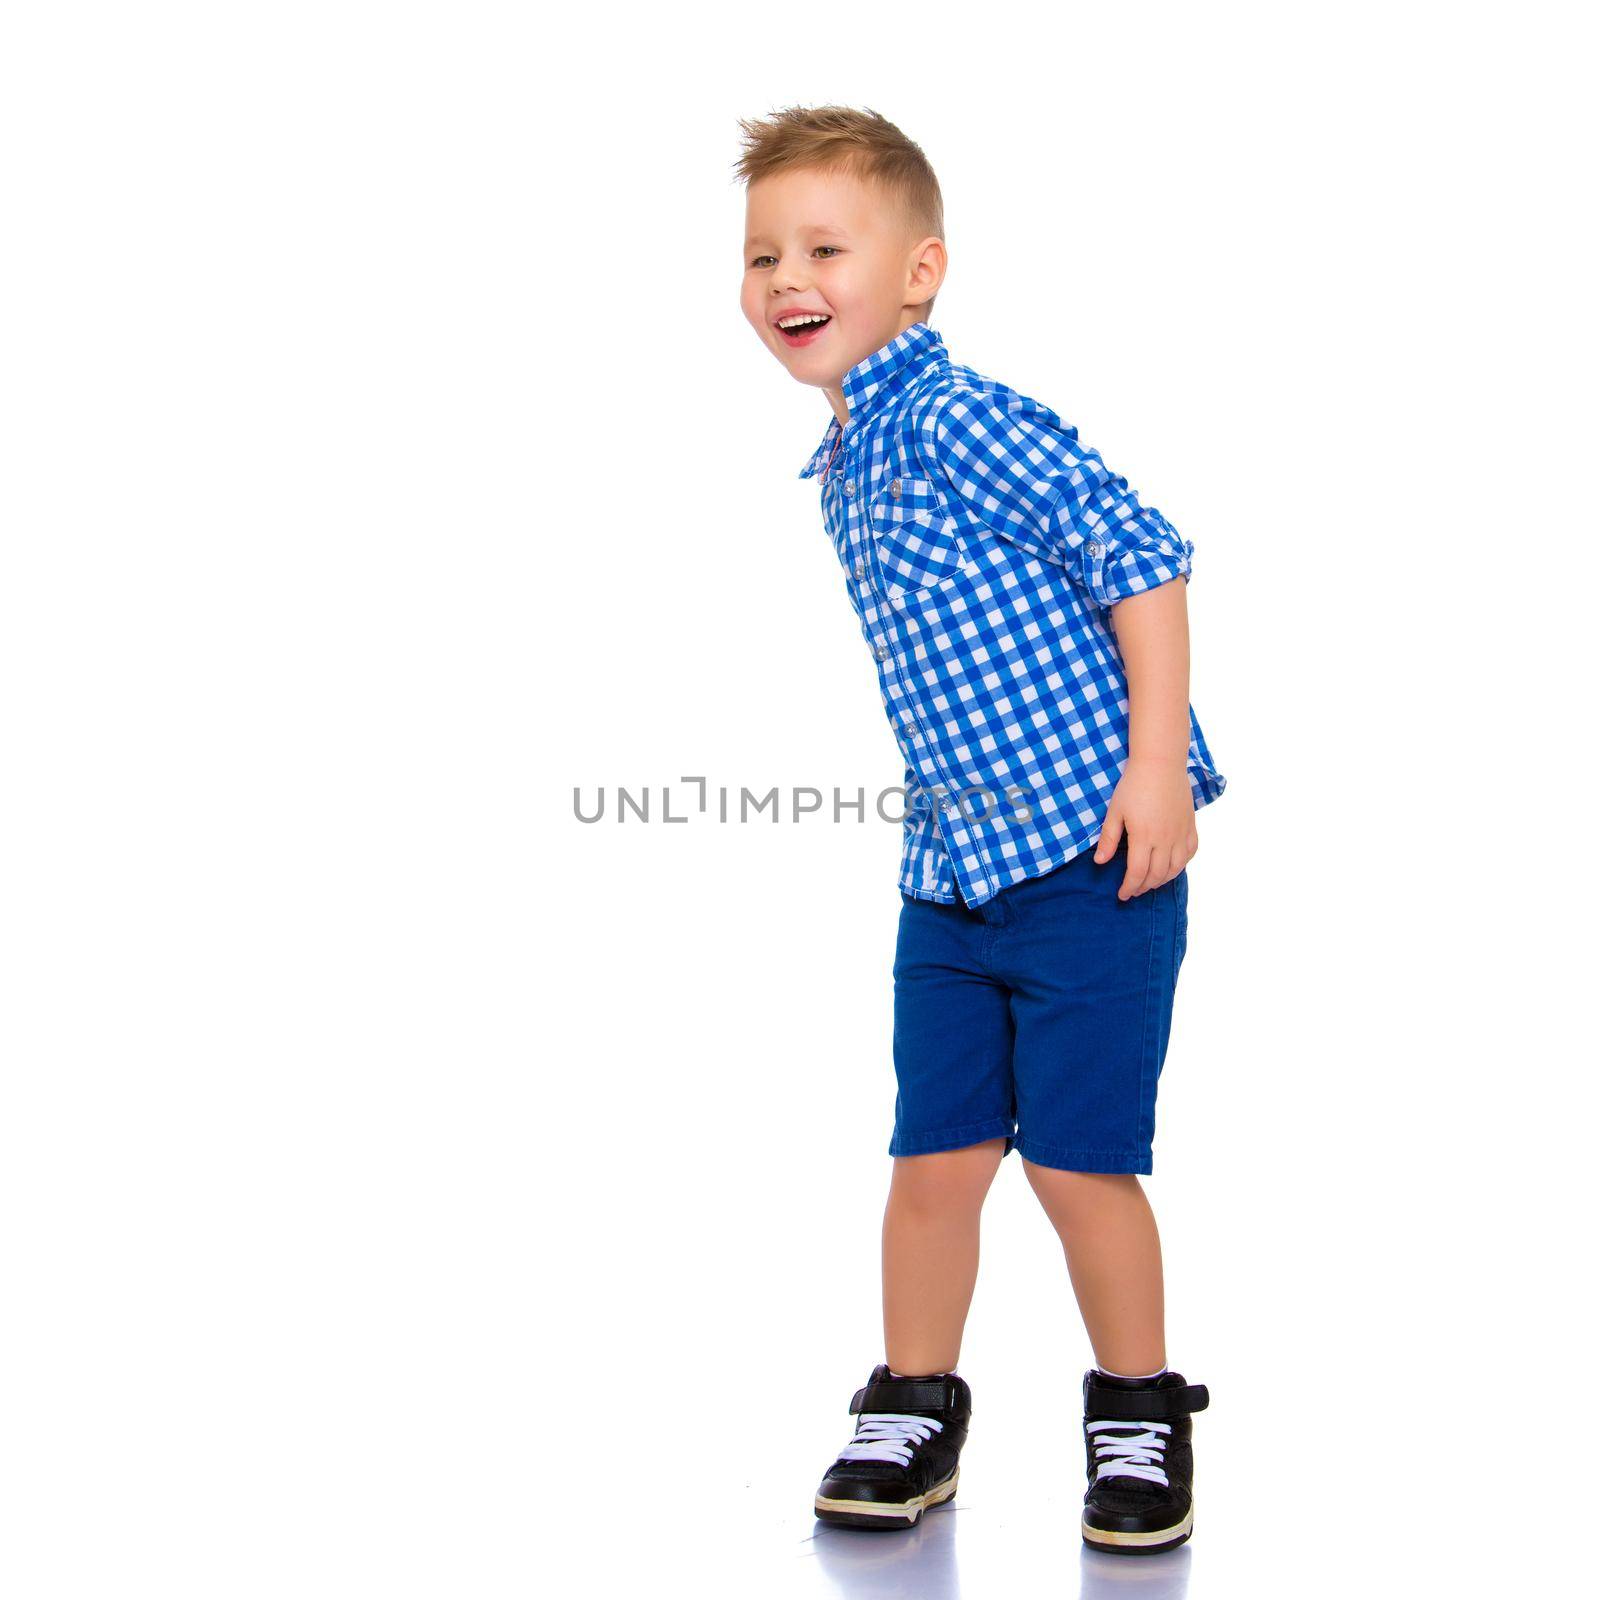 A cute little boy in a shirt and shorts. by kolesnikov_studio